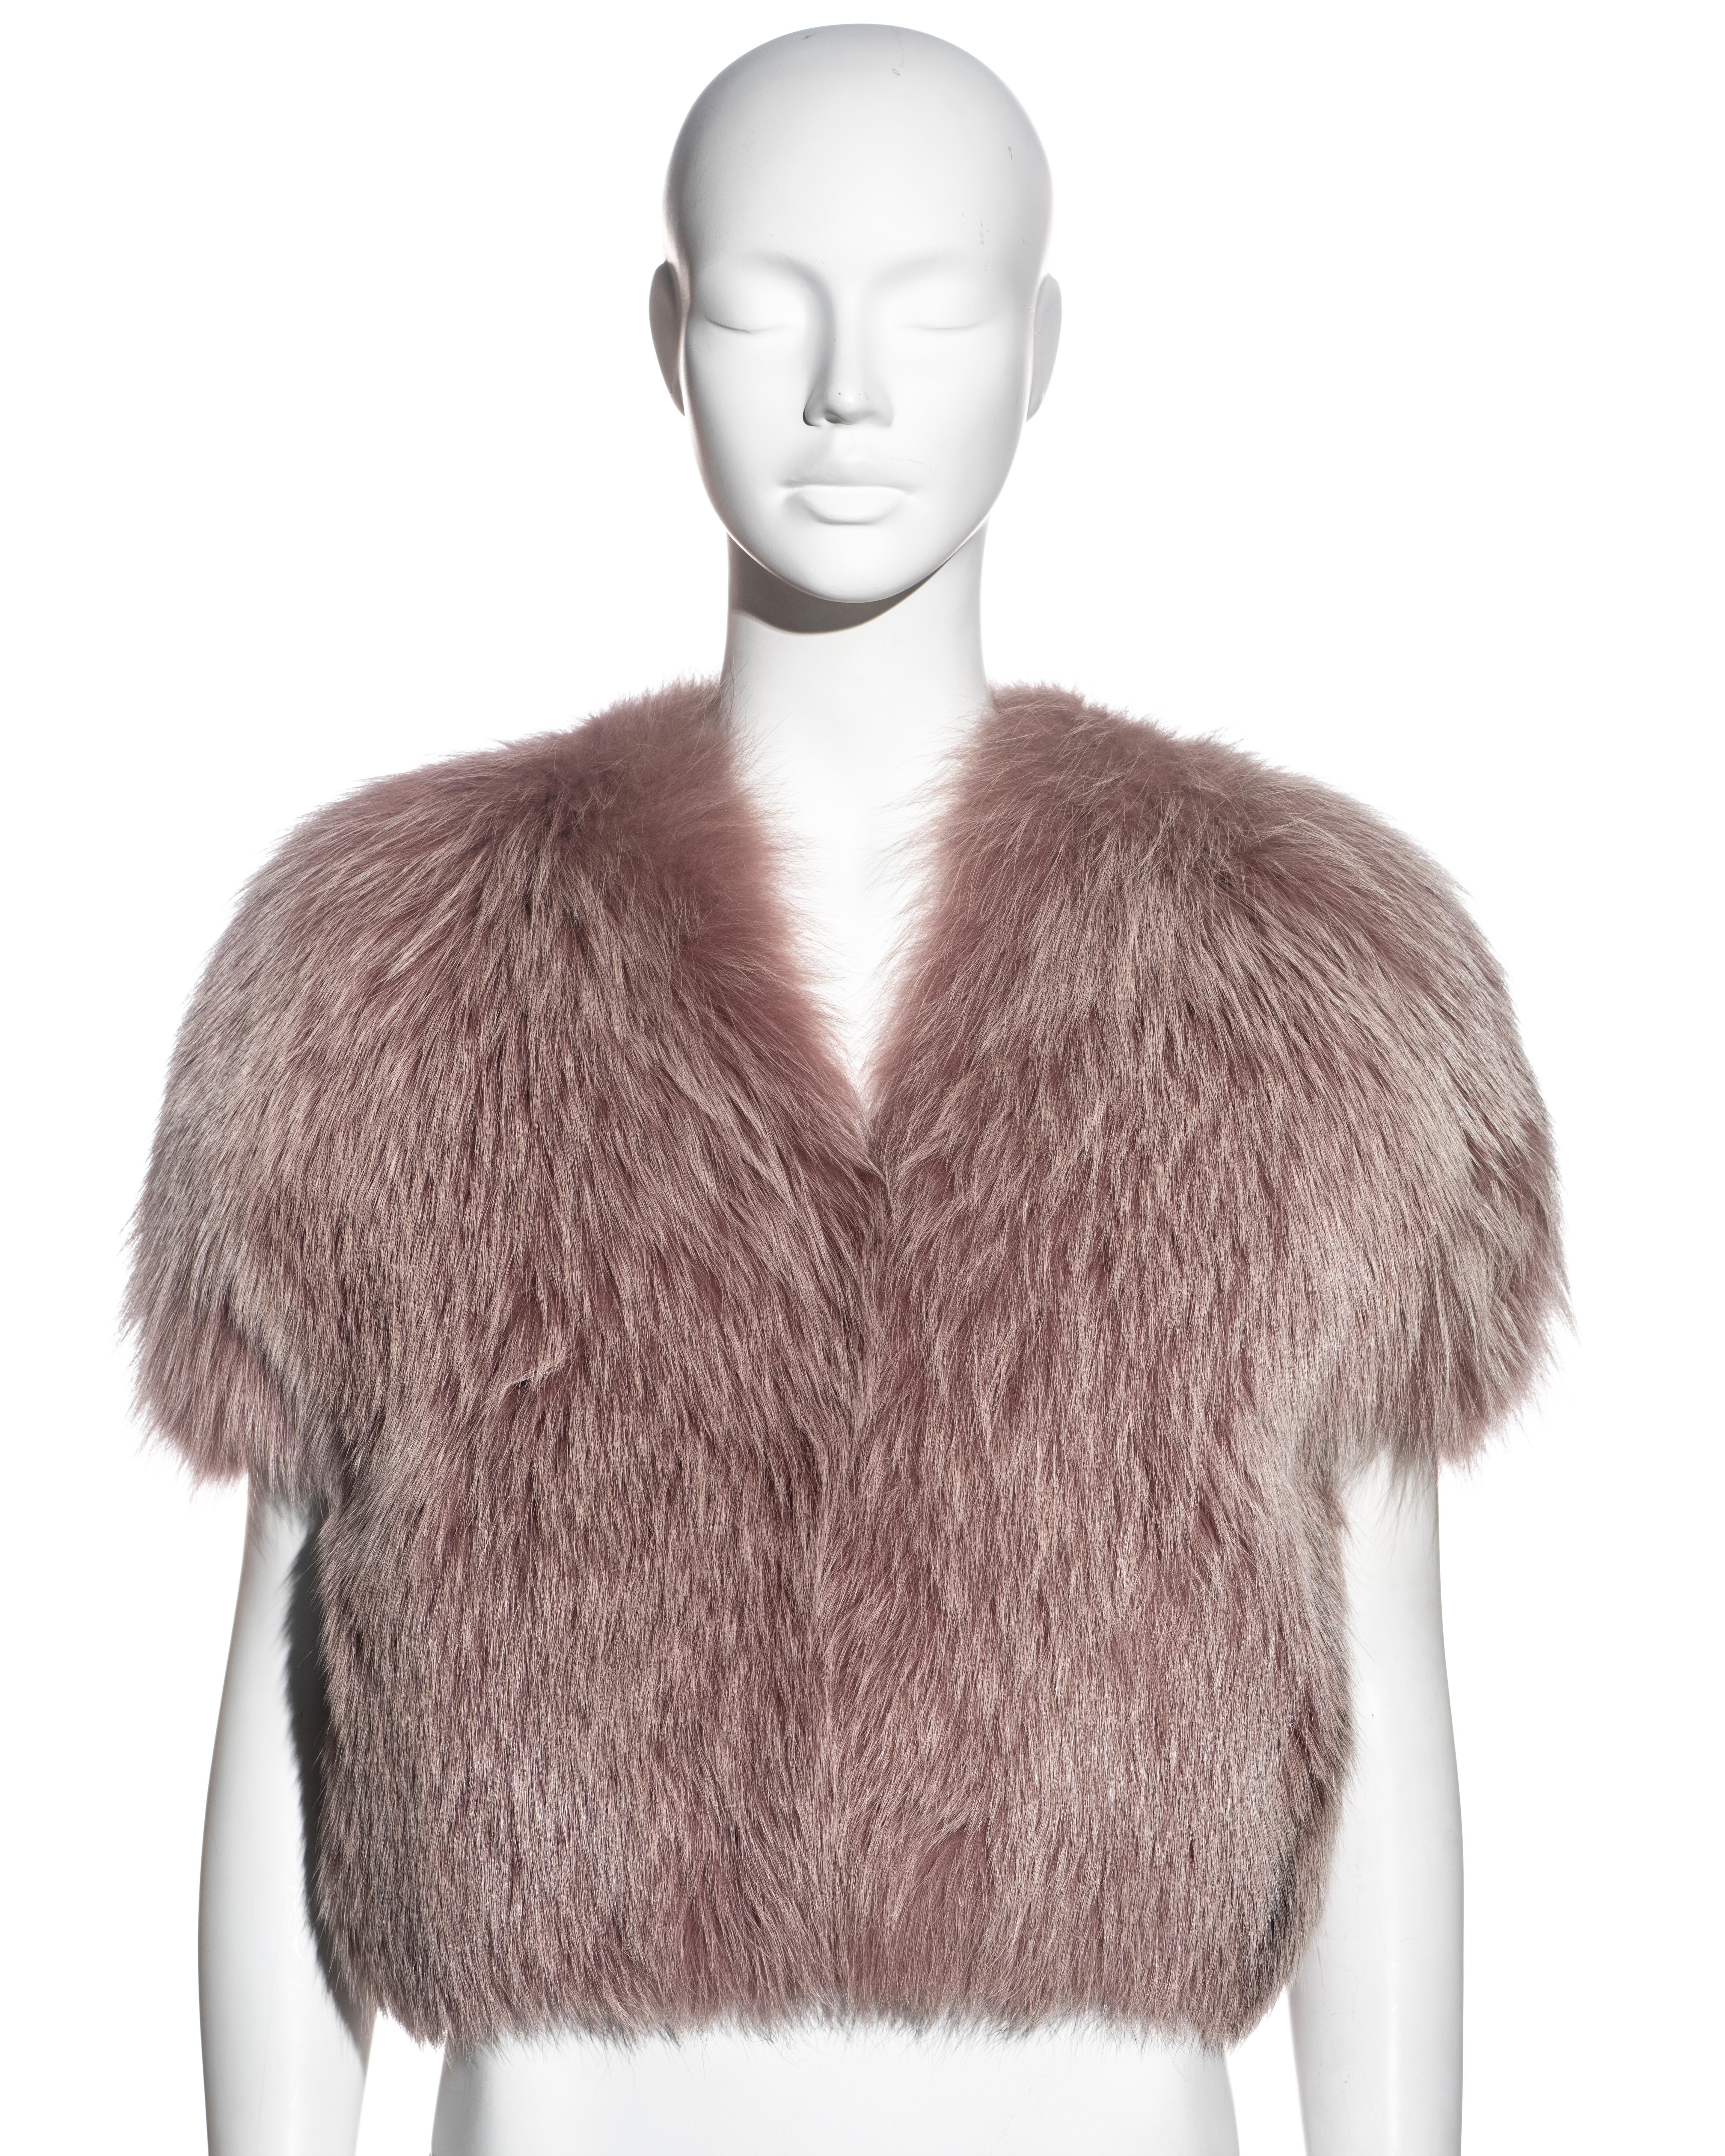 LV Luxury Monogram Multicolor Faux Fur LV Plush Fabric XHYZ816 for Fur  Coats, Plush Jackets, Dolls